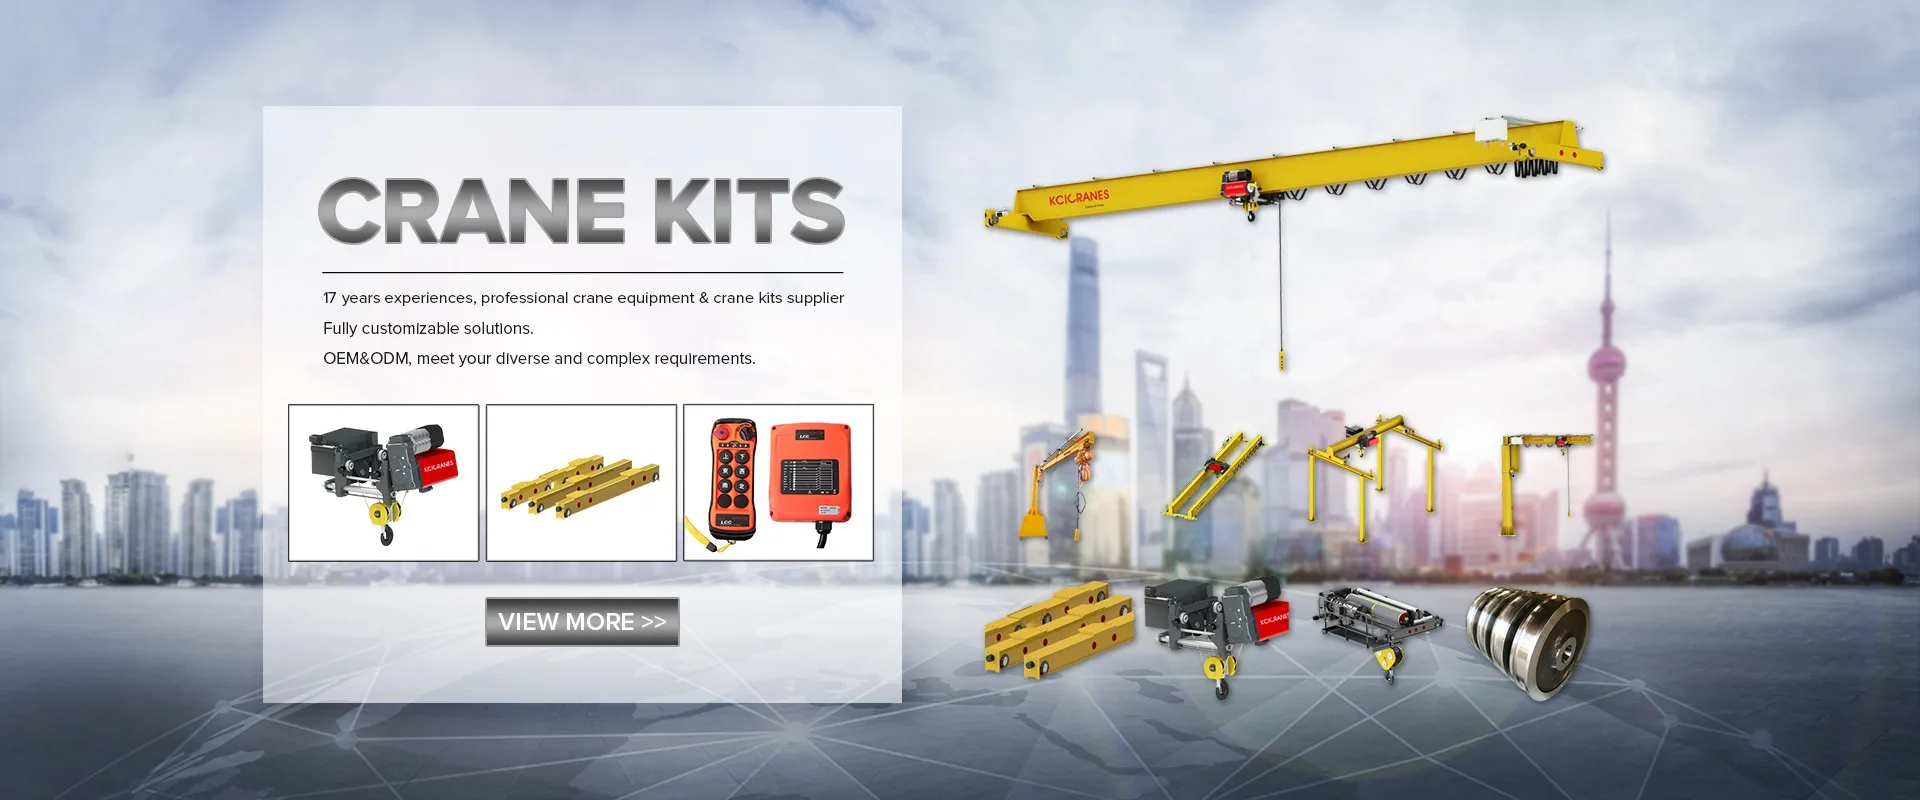 crane parts supplier